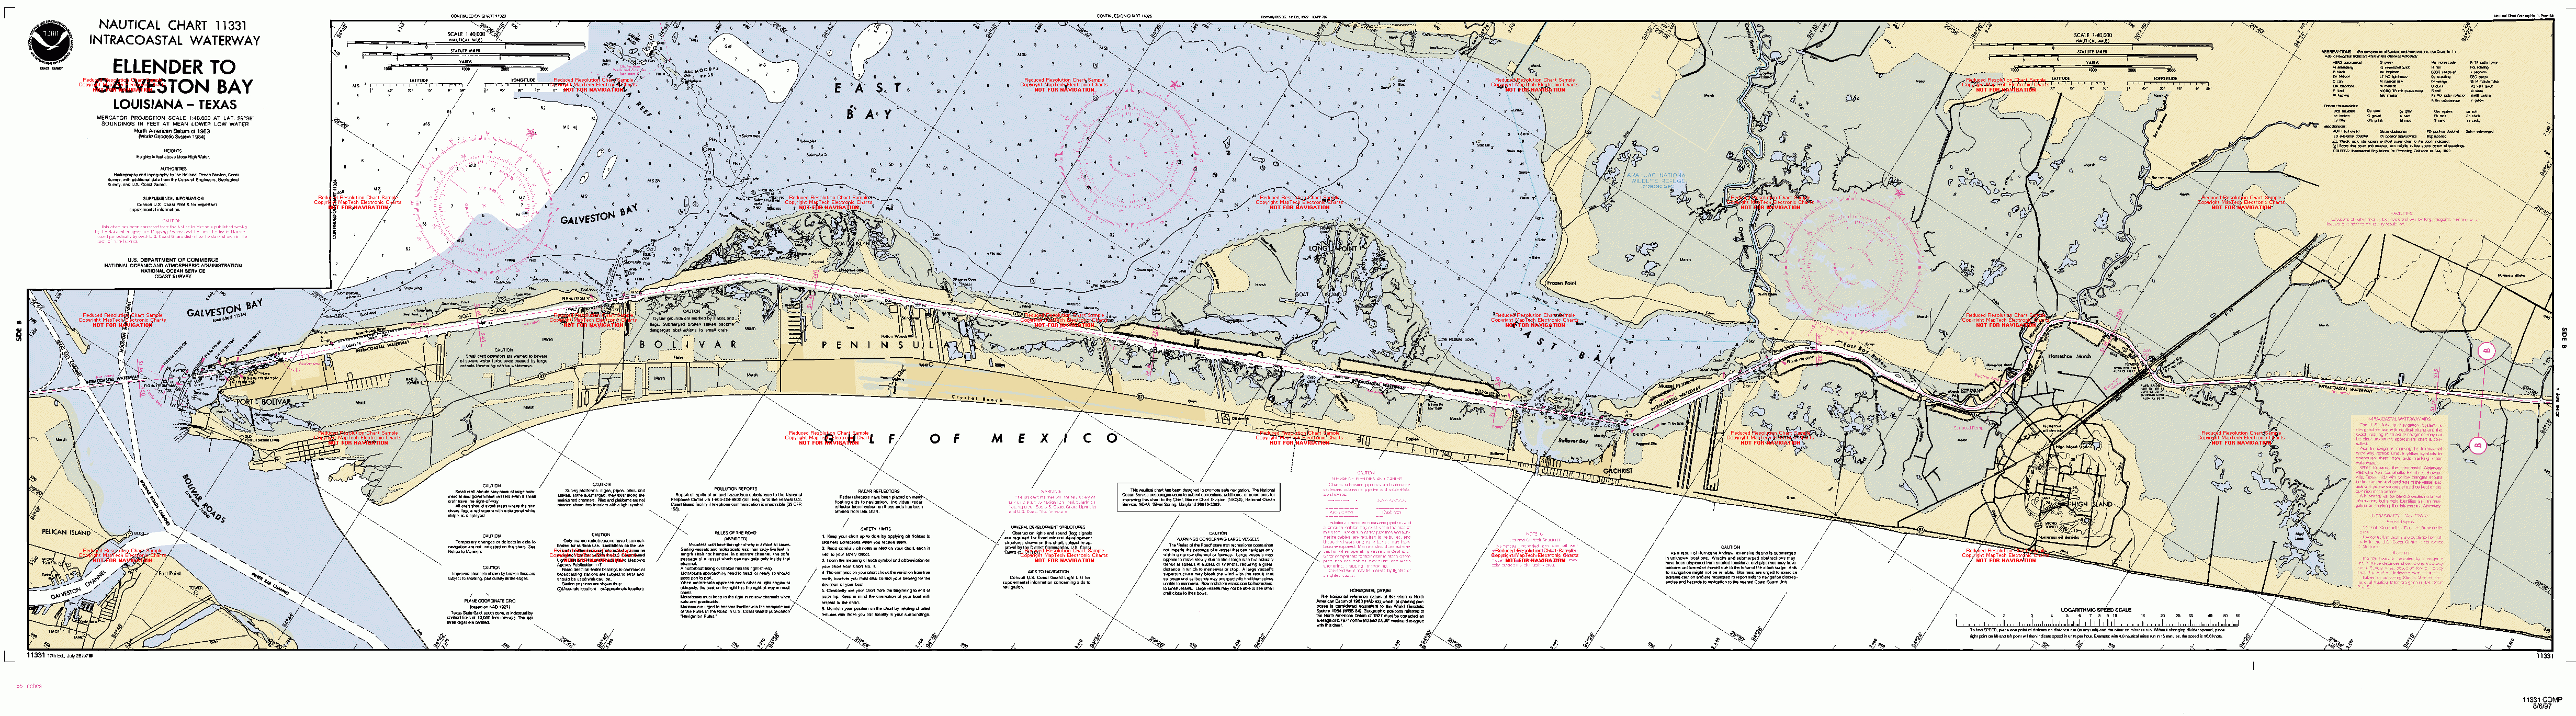 Galveston Bay Fishing Trips - Charter Rates - Texas Gulf Coast Fishing Maps